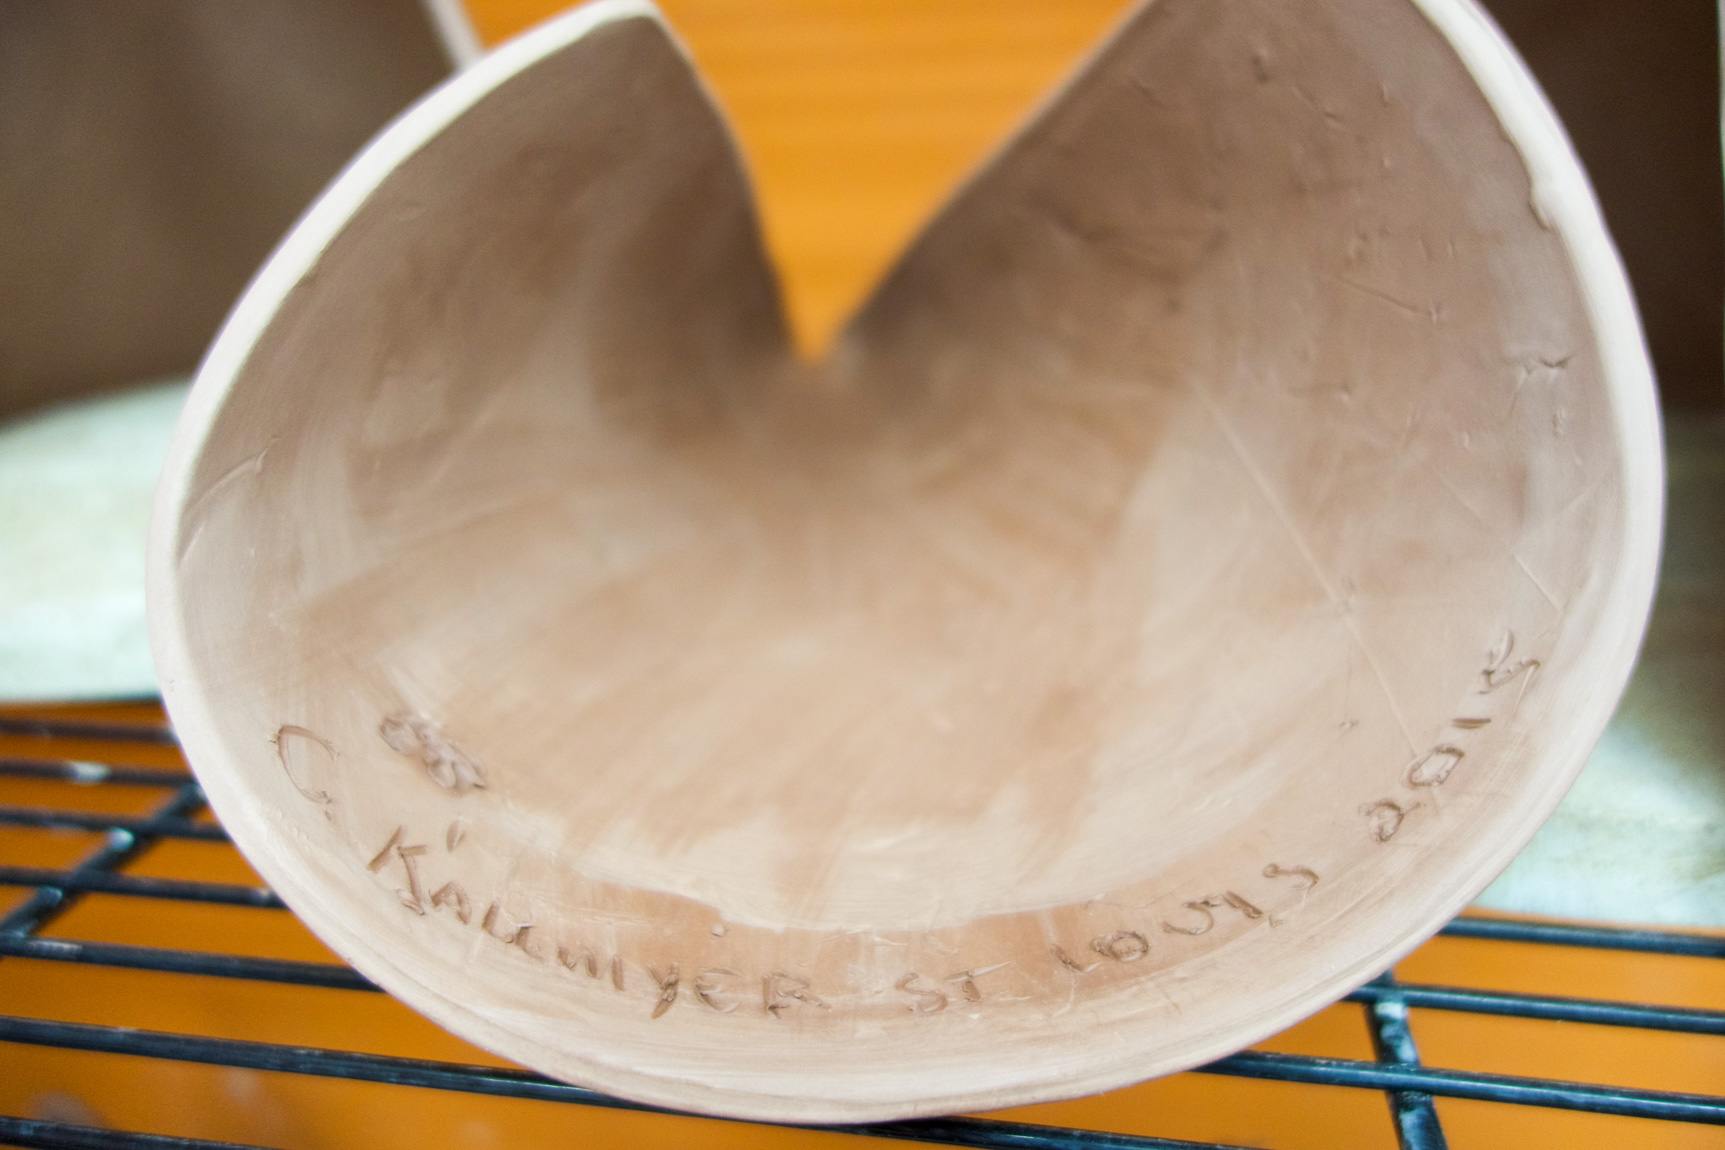 Closeup of the inscription inside an instrument reading "C Kallmyer St. Louis 2015."